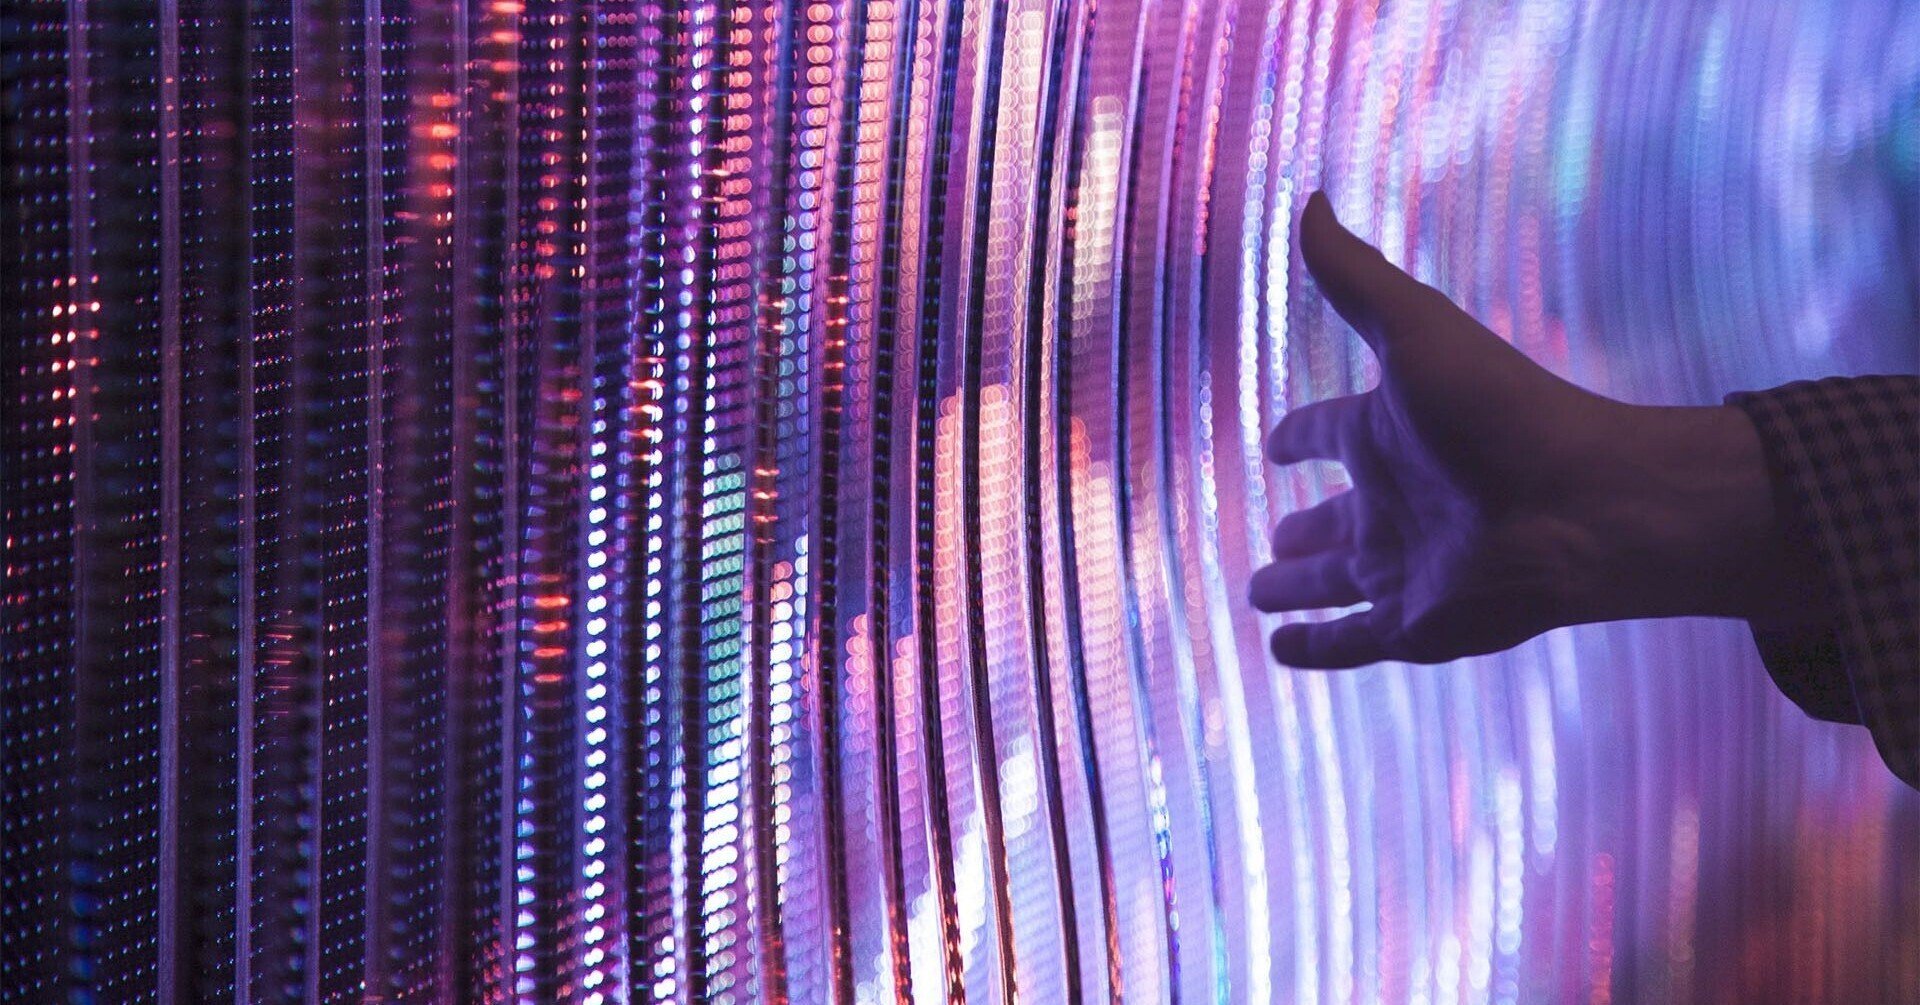 A hand waving over purplish digital lights